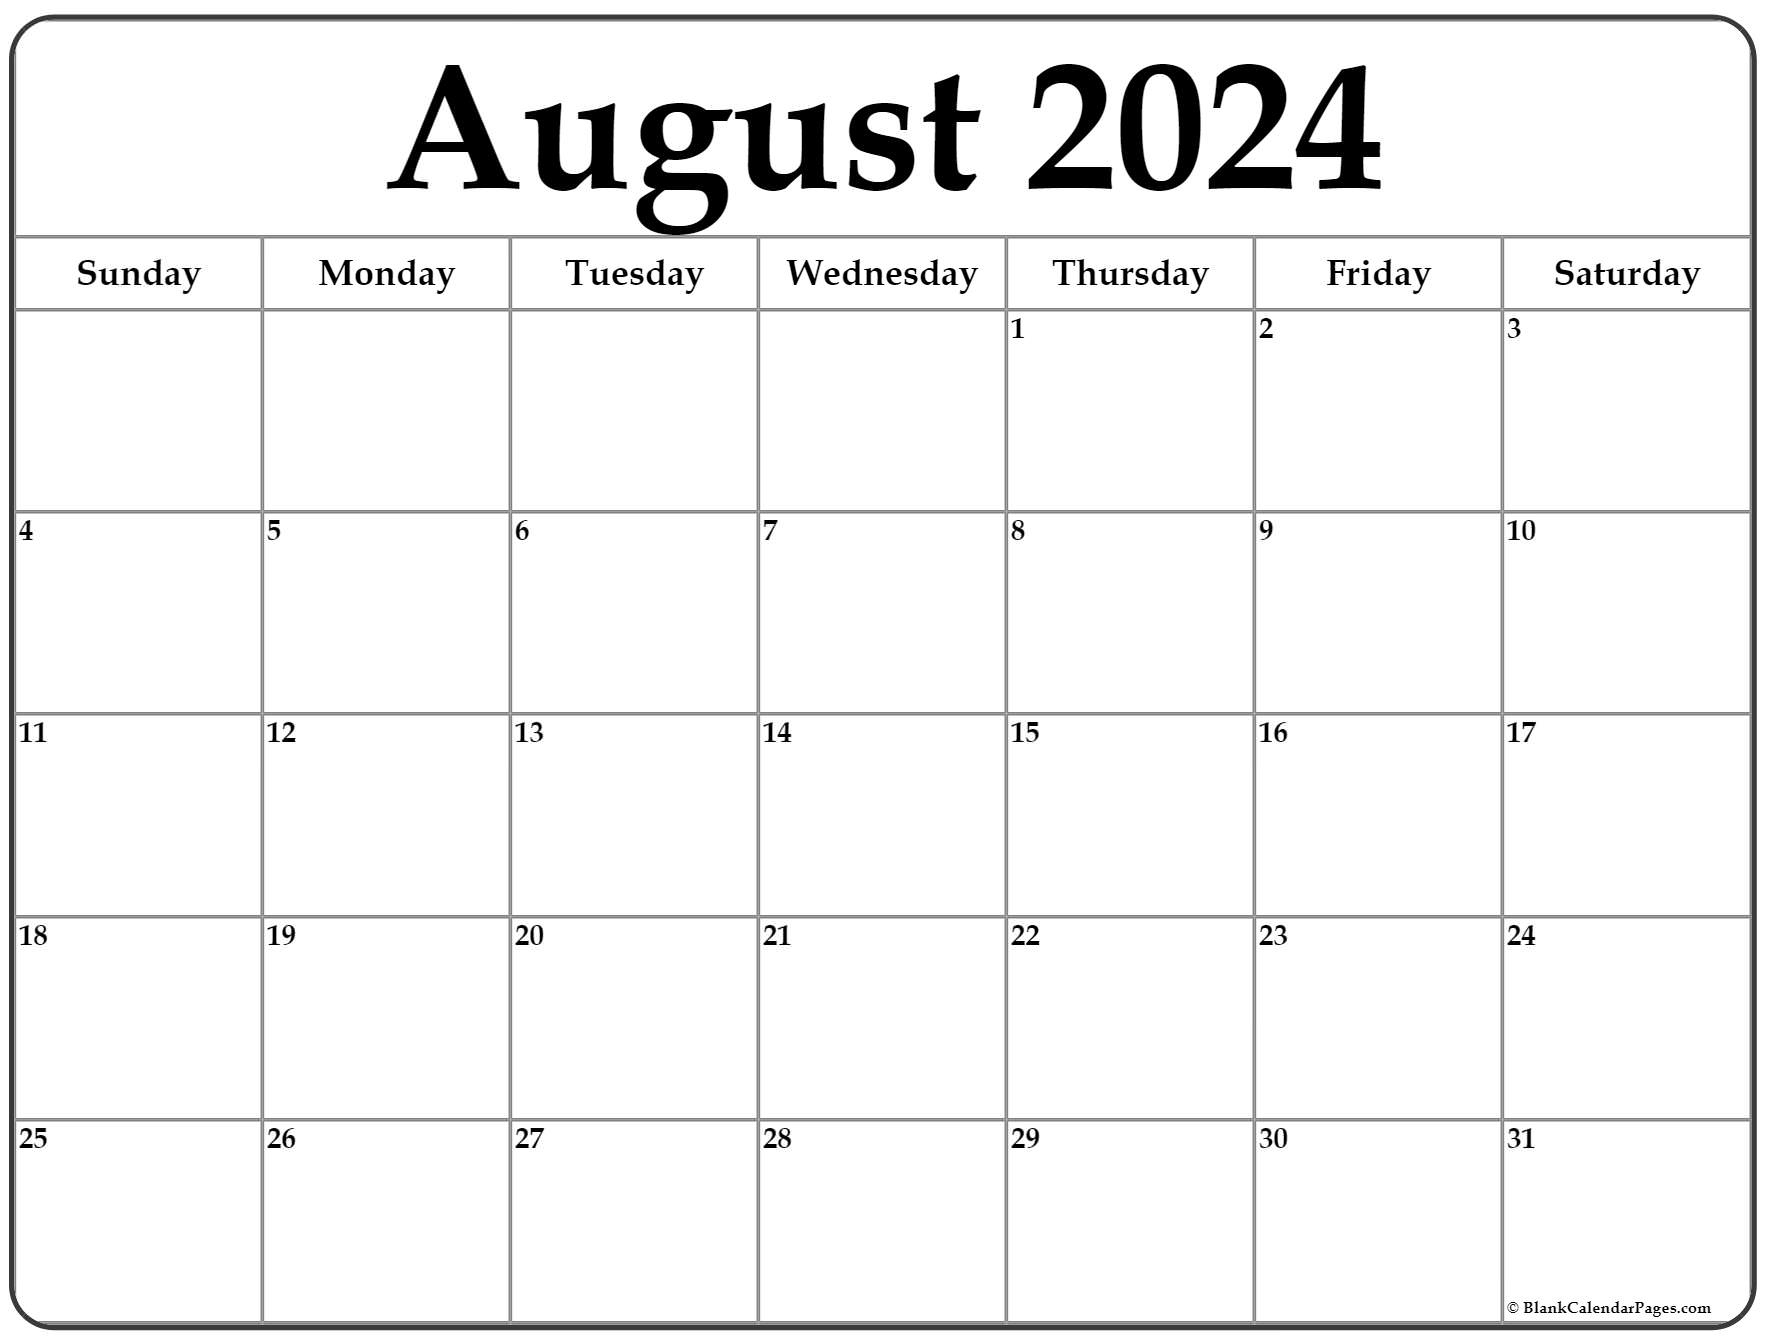 August 2024 Calendar Free Printable Calendar - Free Printable 2024 Monthly Calendar August